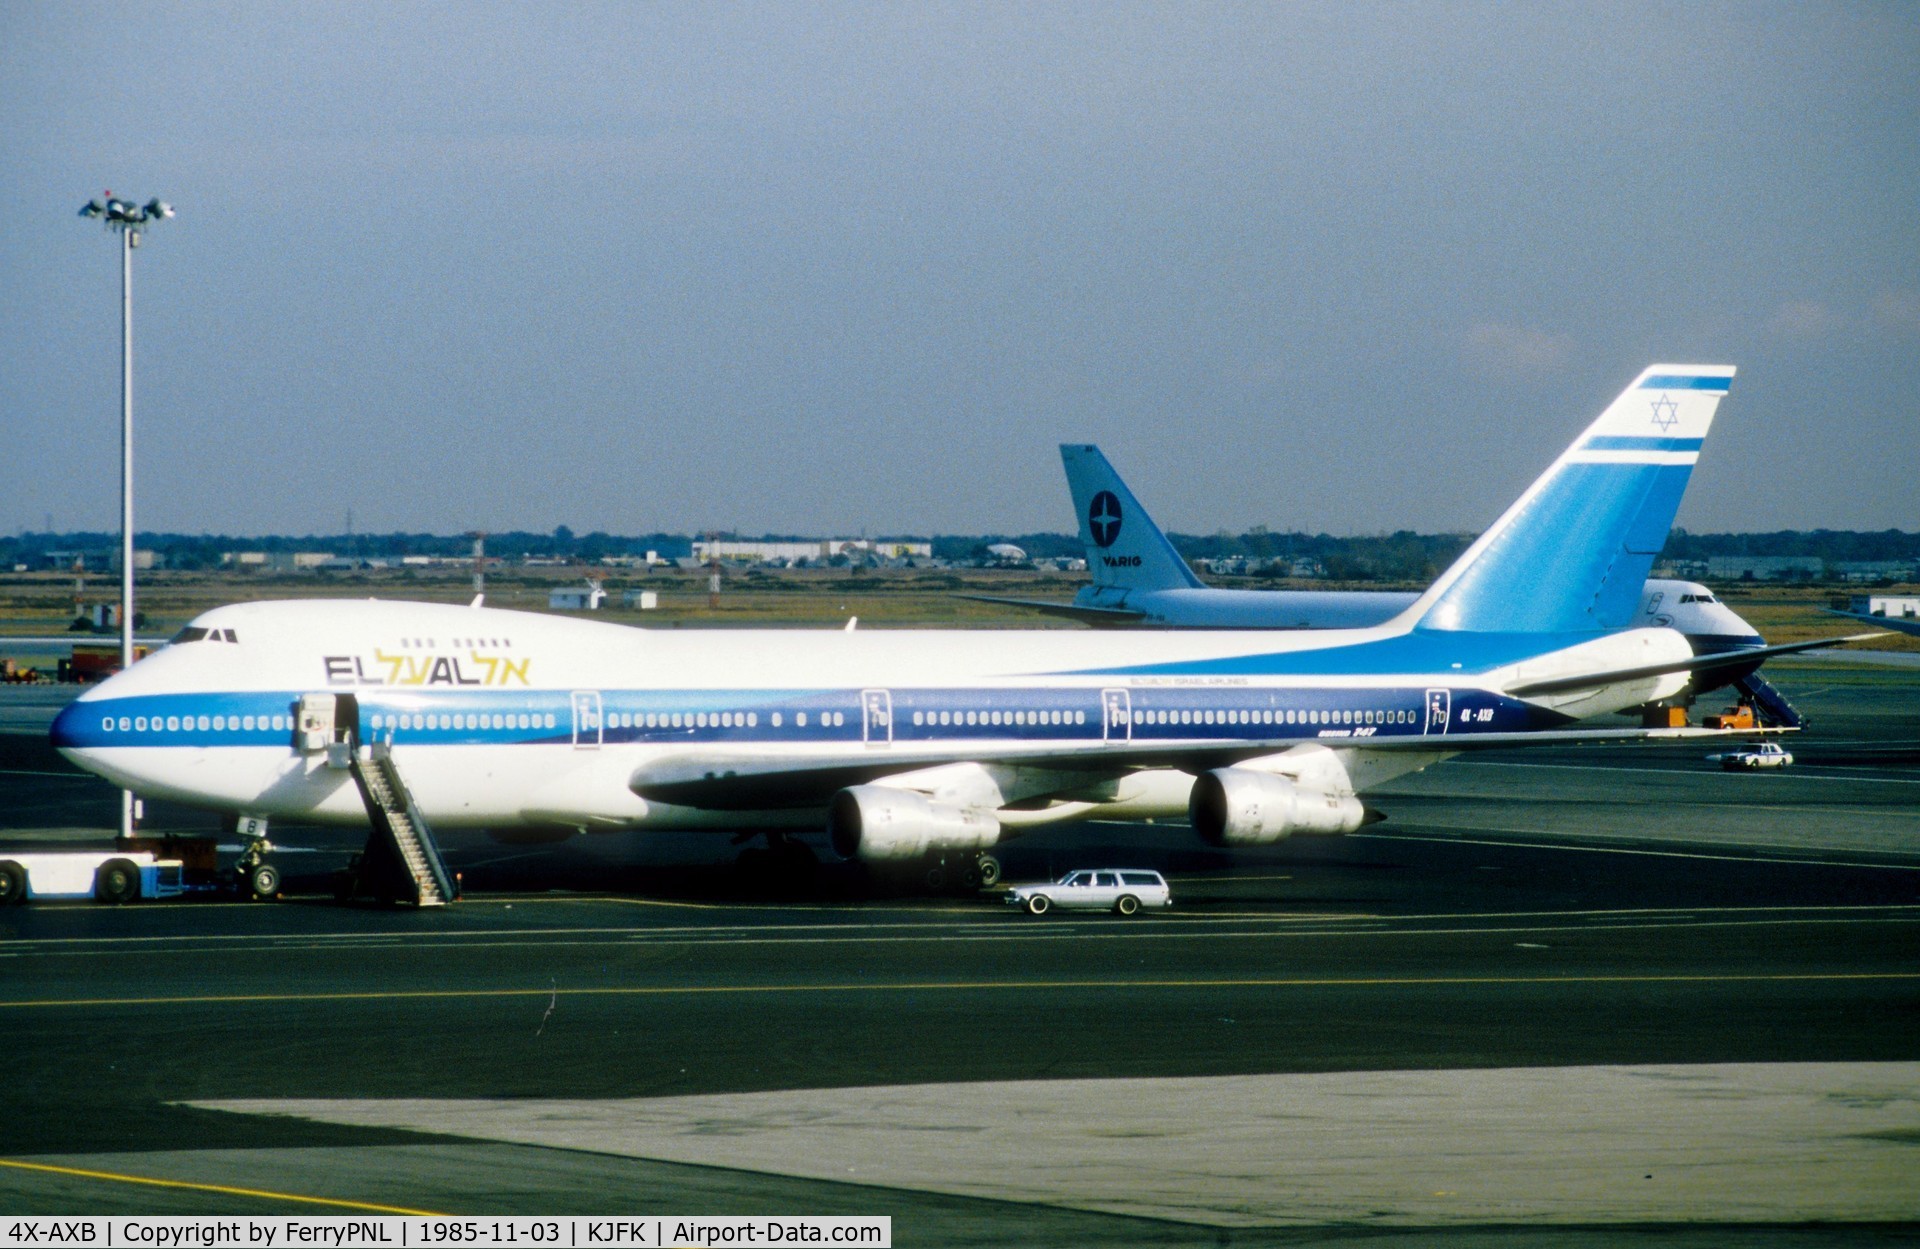 4X-AXB, 1971 Boeing 747-258B C/N 20274, ELAL B742 in JFK